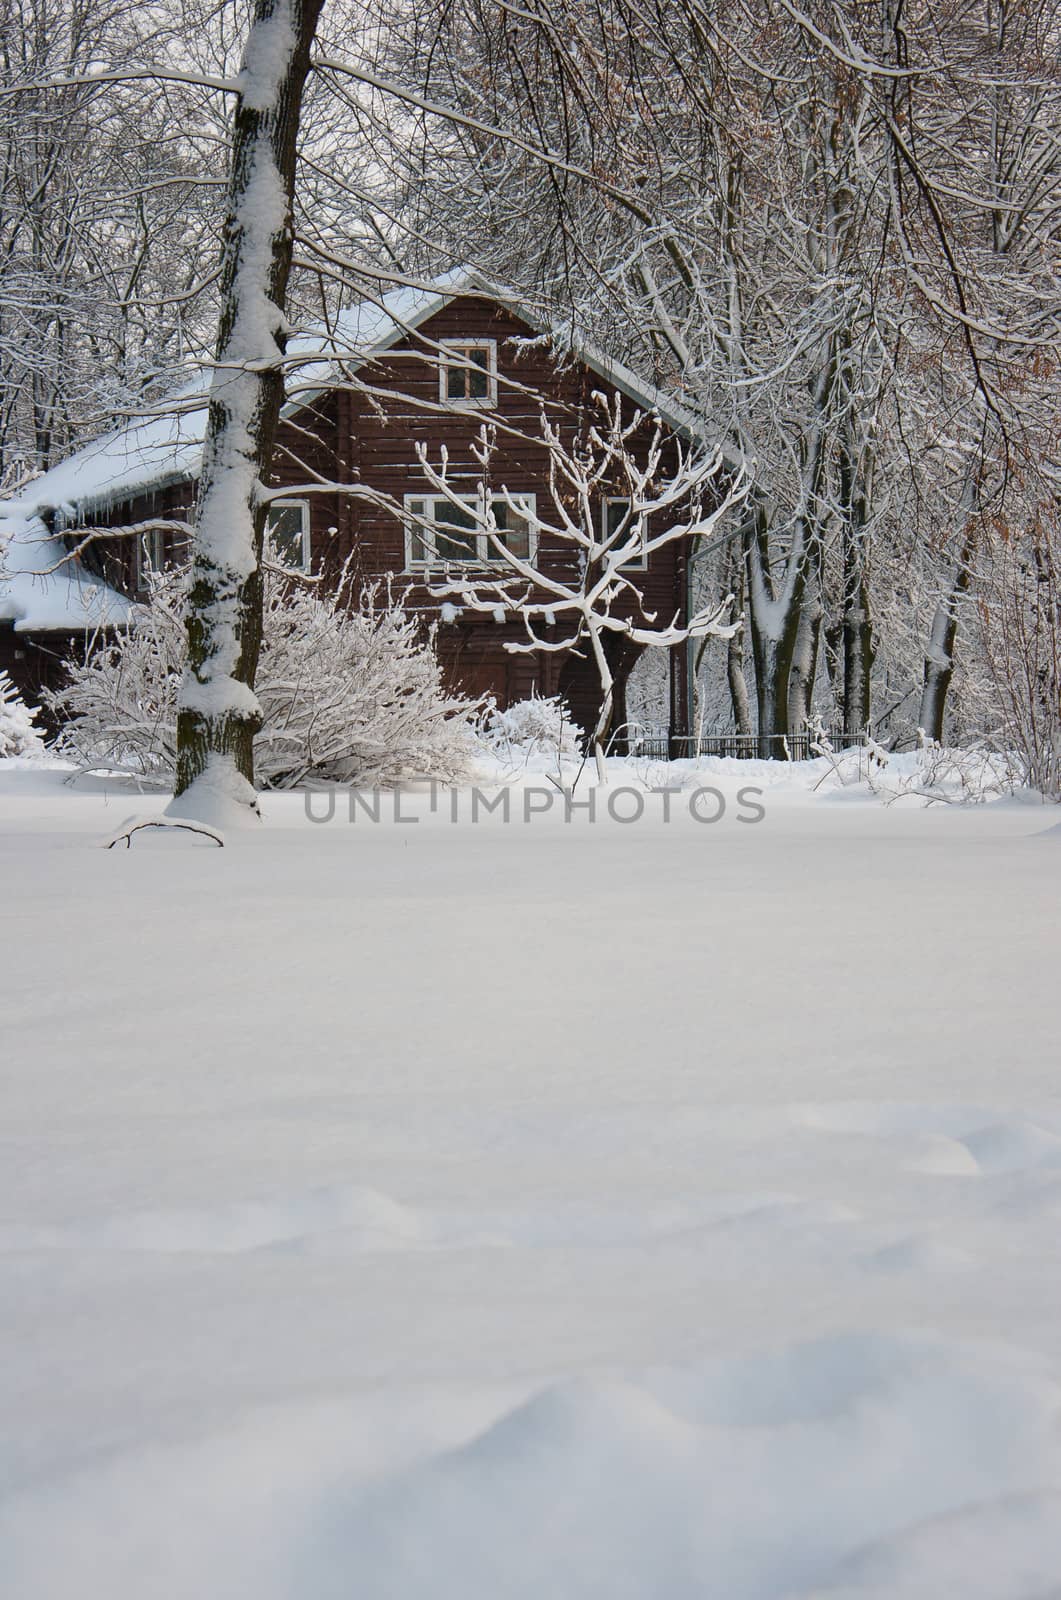 The snowy house by raddnatt